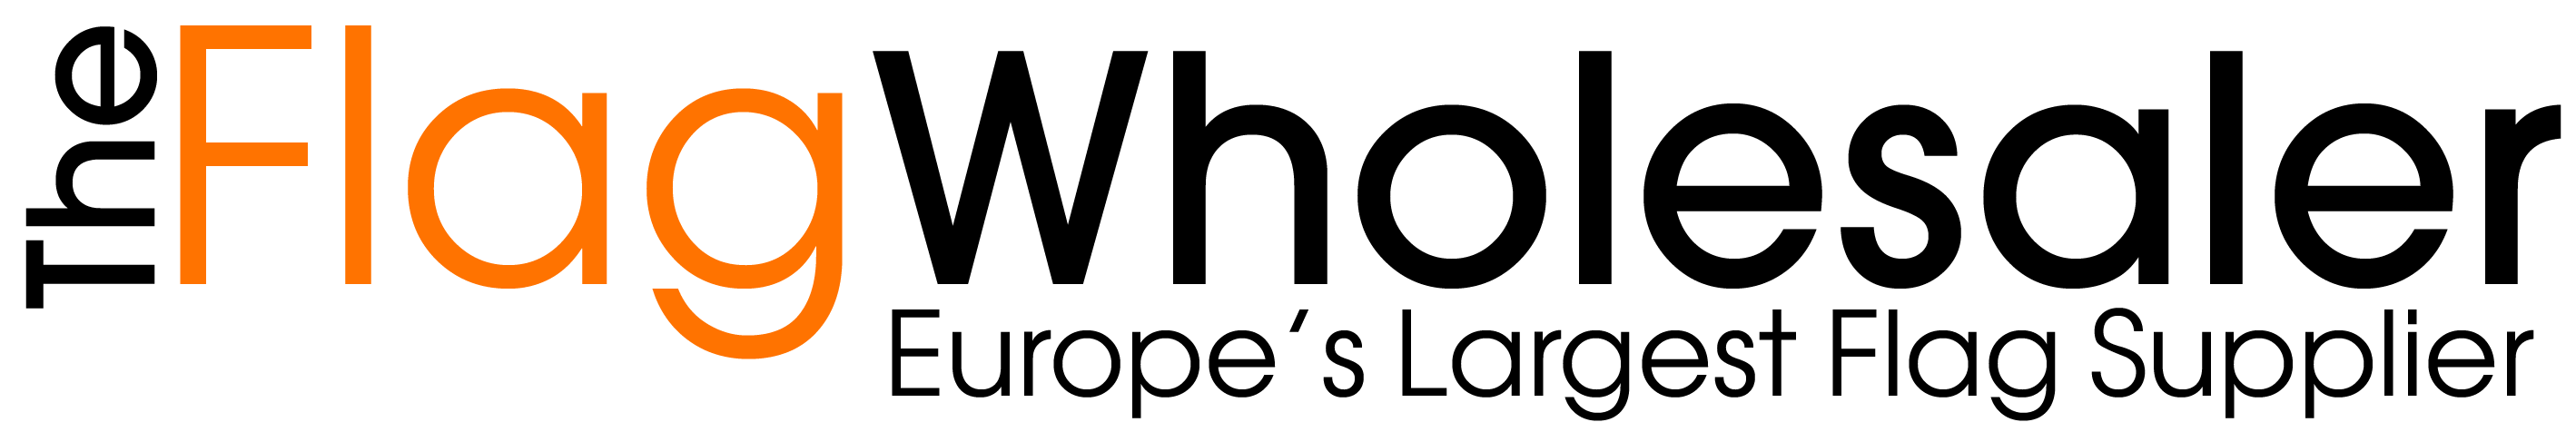 The Flagwholesaler logo, europes largest flag supplier